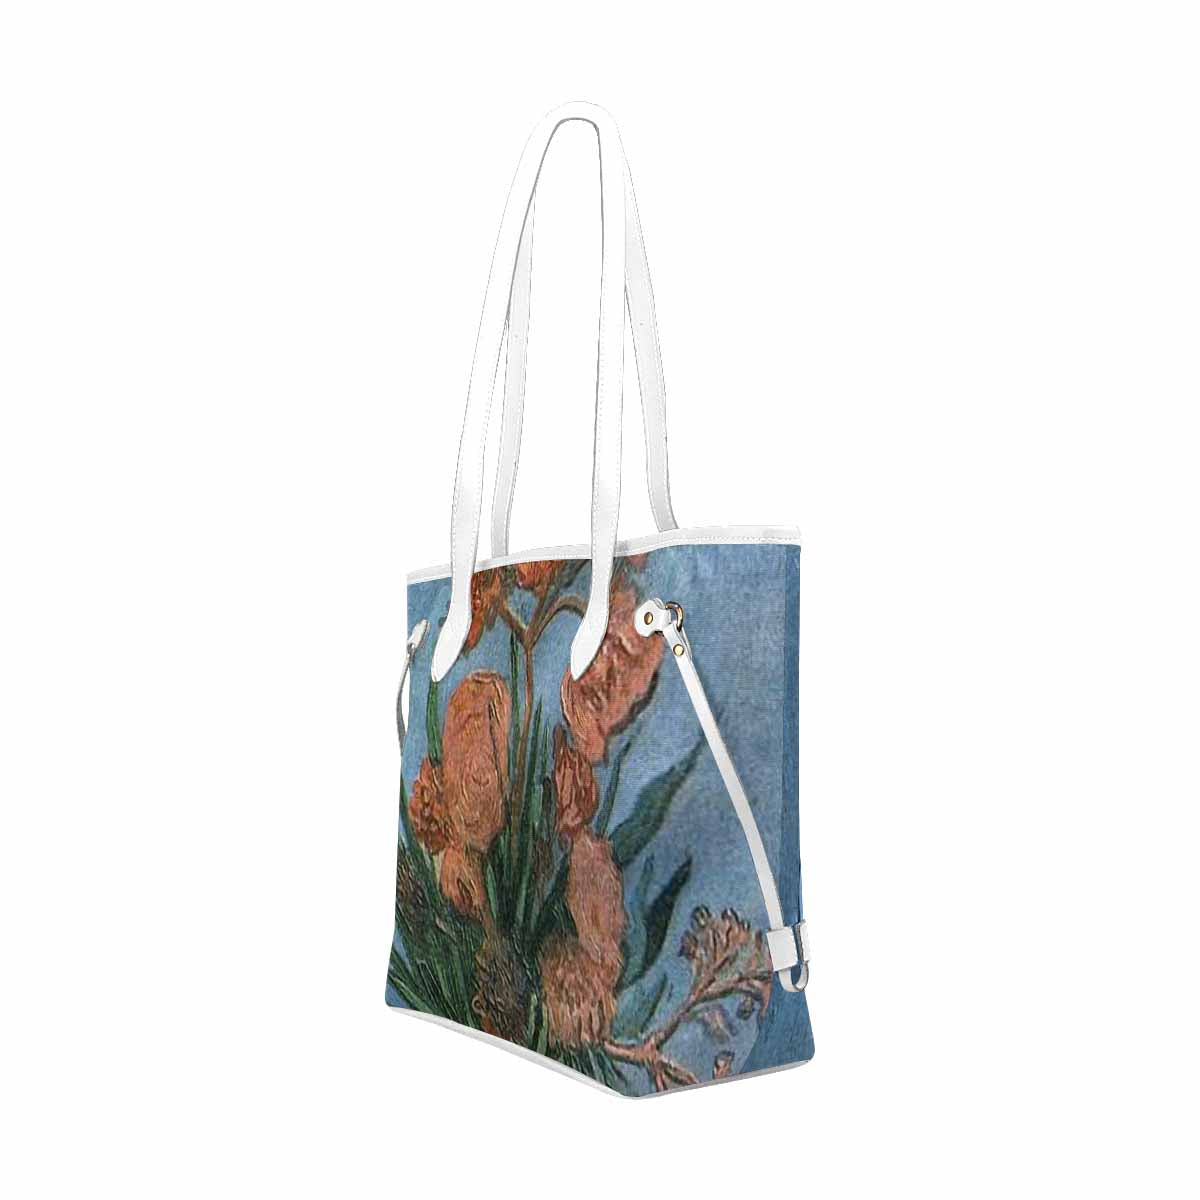 Vintage Floral Handbag, Classic Handbag, Mod 1695361, Design 50 WHITE TRIM